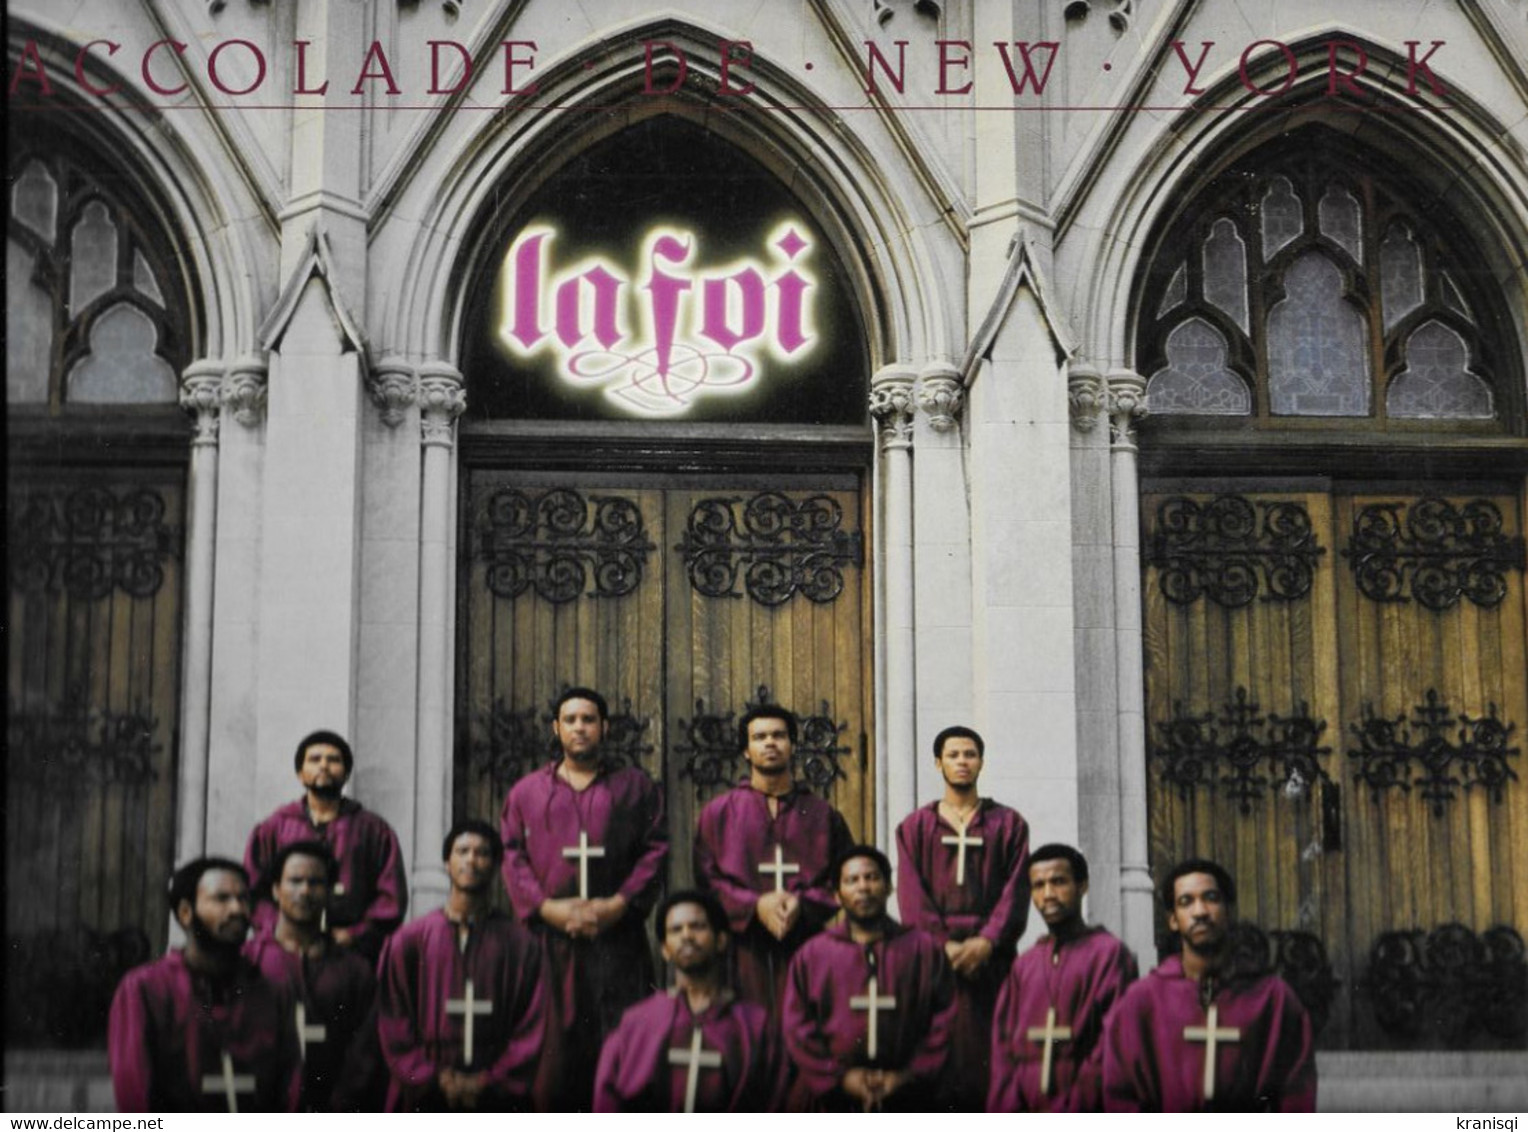 Vinyle 33 T ,      Accolade De New York ‎– La Foi - Religion & Gospel